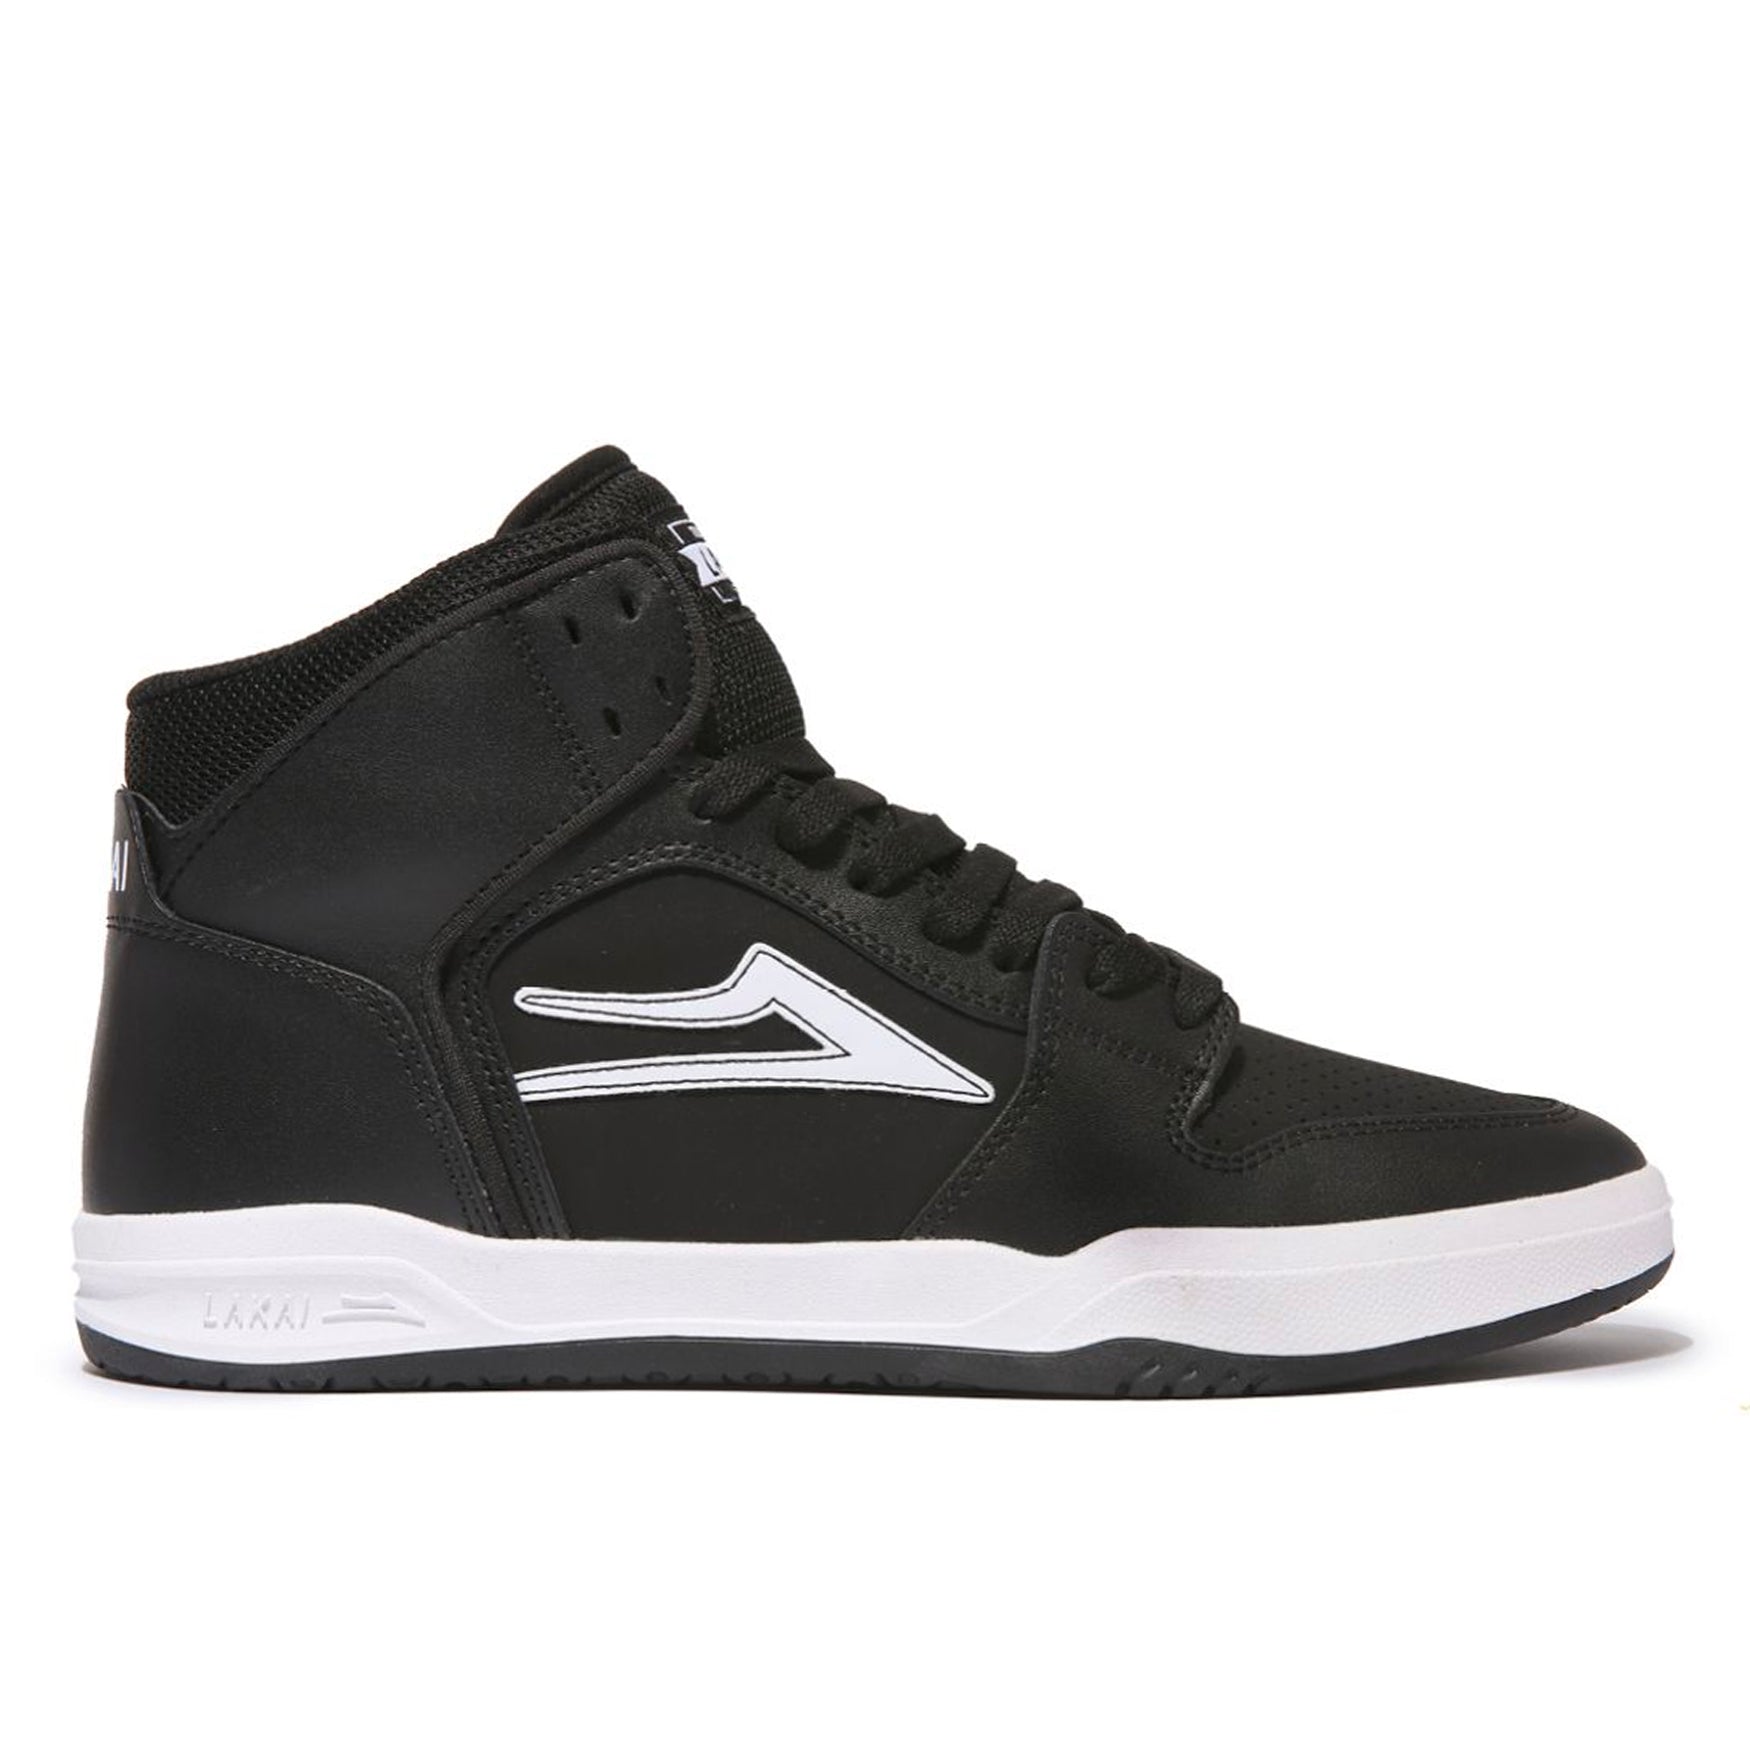 Lakai Telford High Shoe - Black Leather - Prime Delux Store